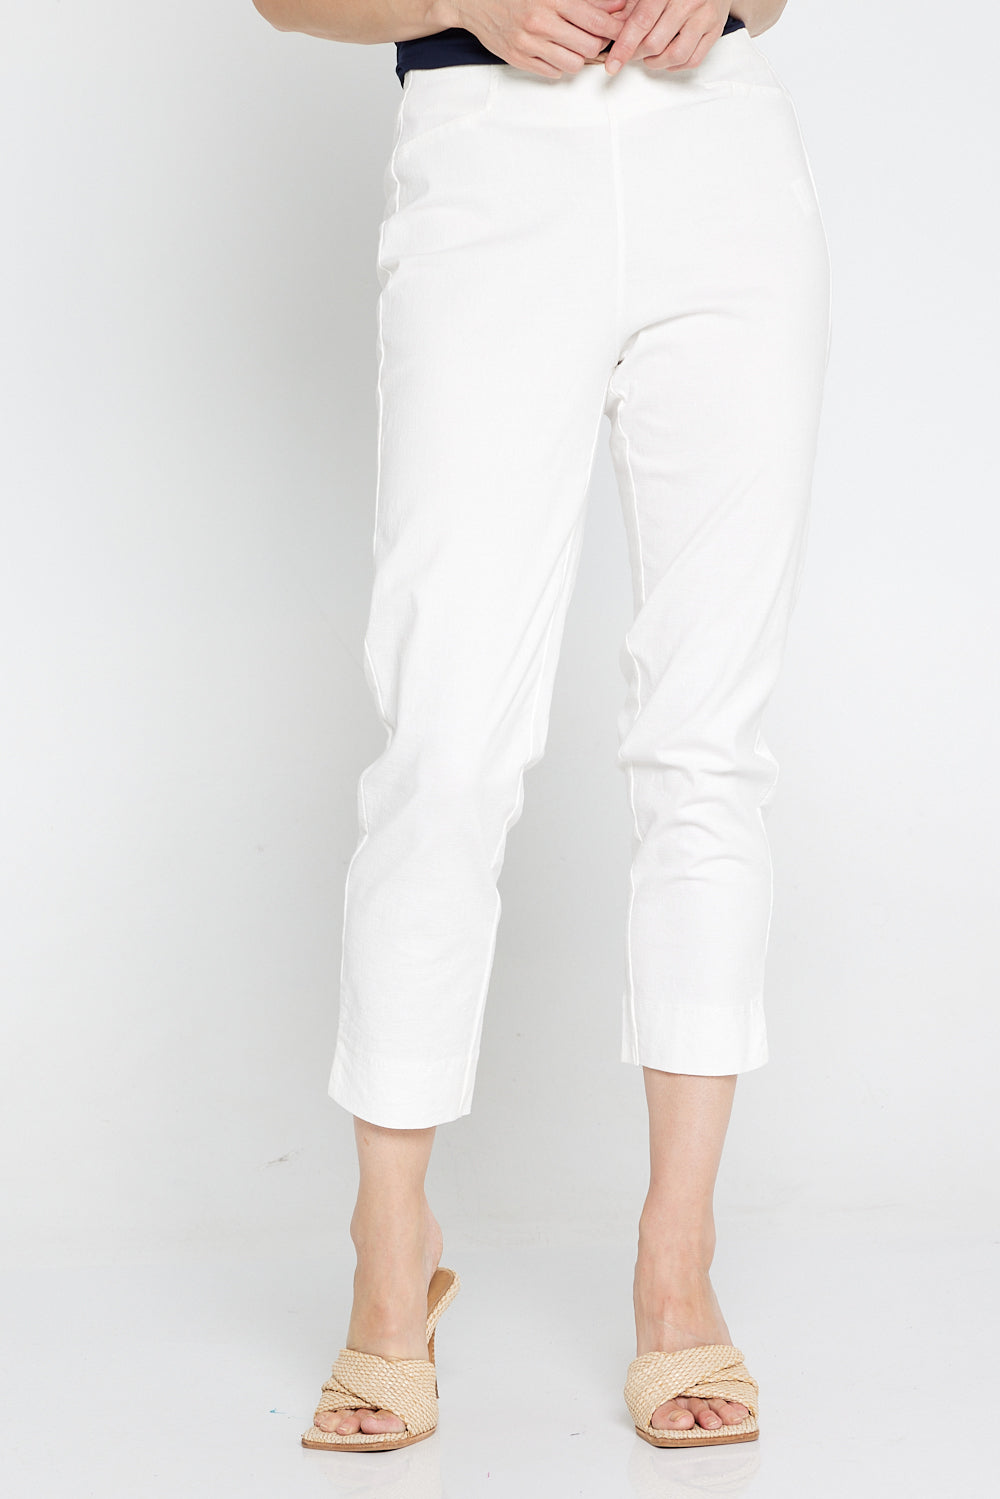 Mel & Lisa Women Size 14 White Capri Pants Stretch Cotton Vintage Split Hem  - $19 - From Dan